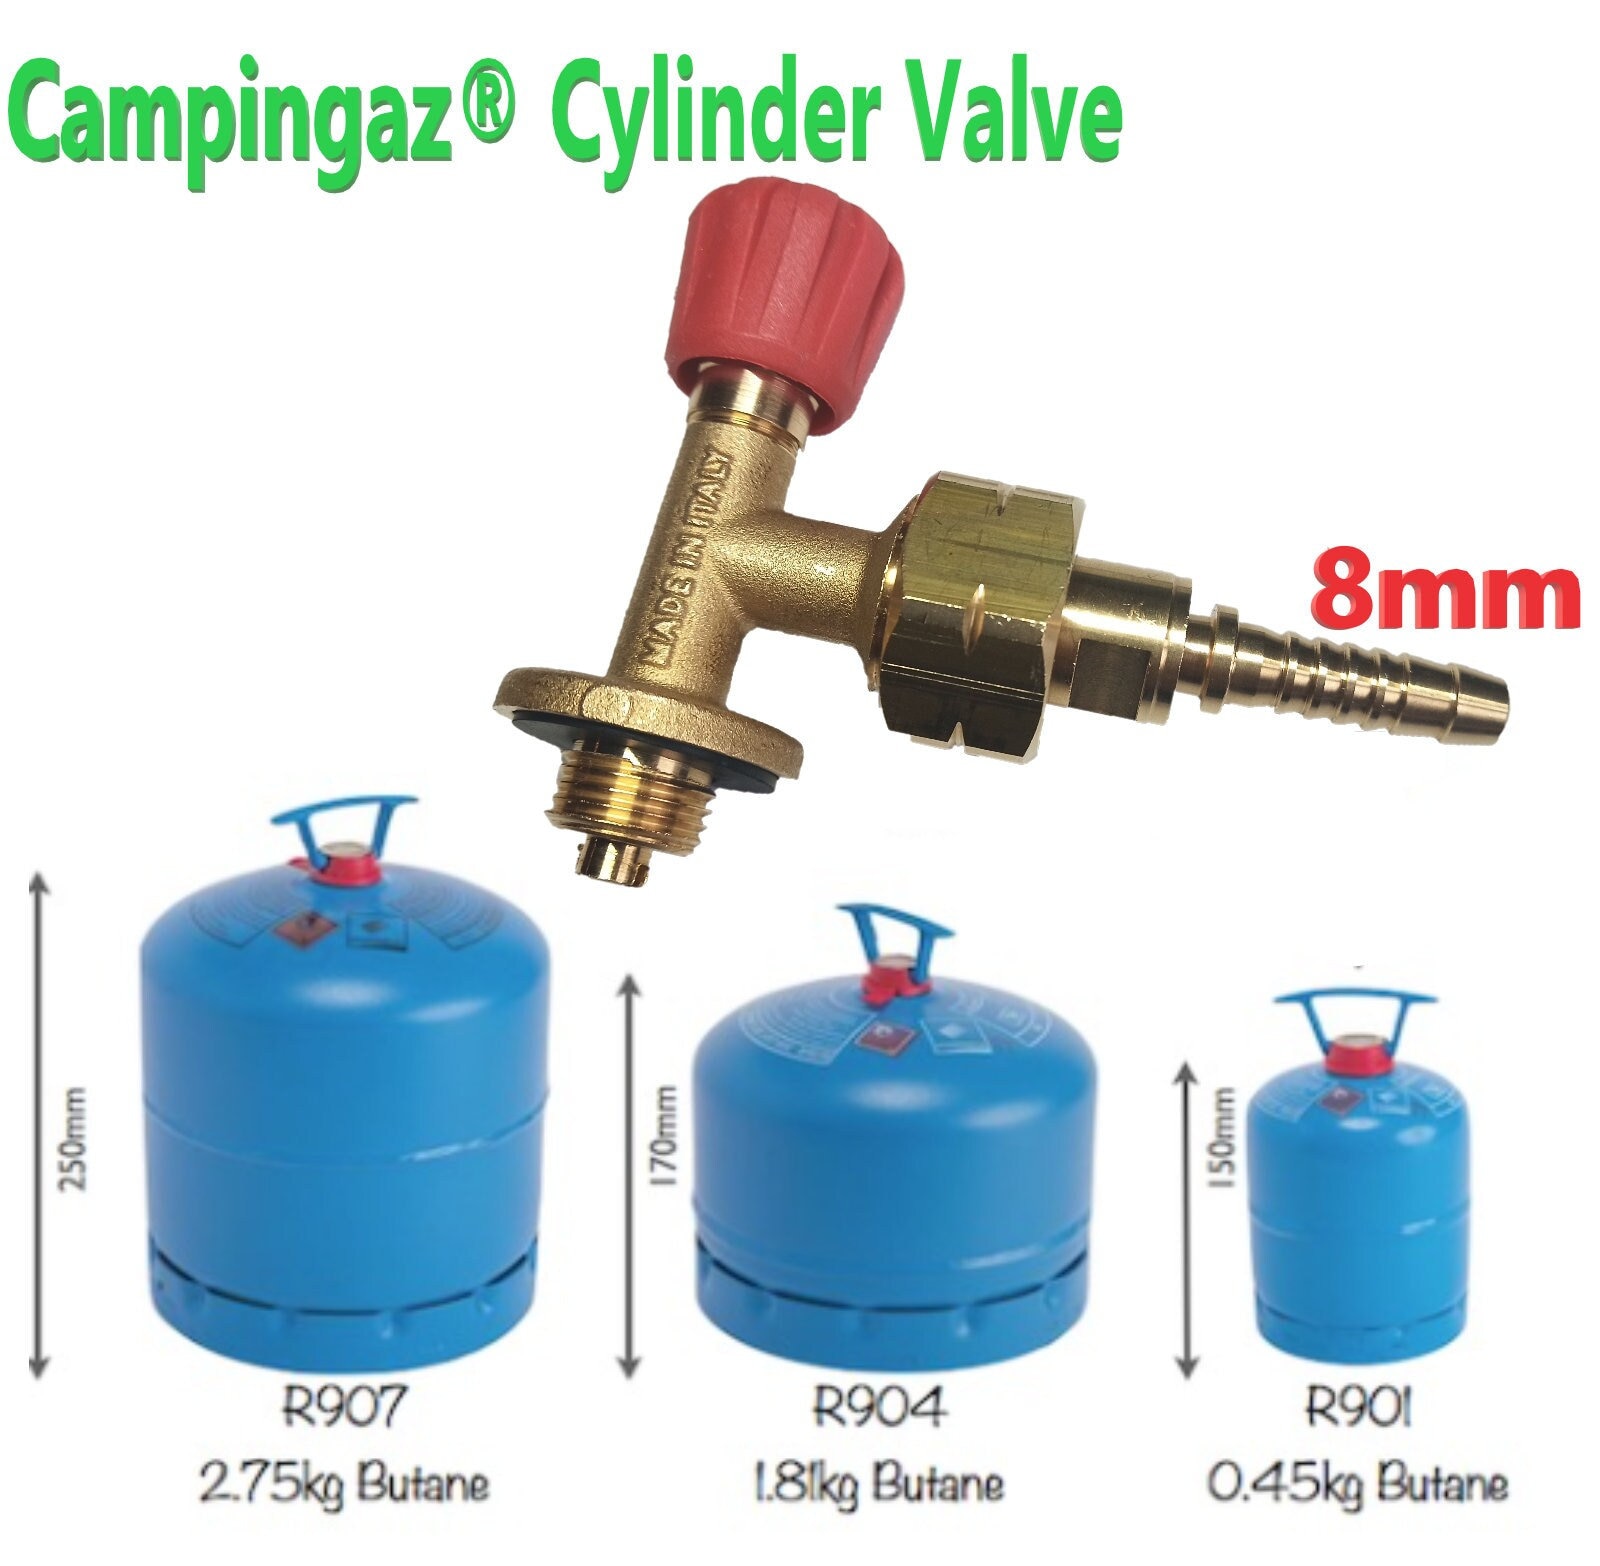 Campingaz Cylinder Valve FOR BUTANE 901, 904, 907 Cylinders